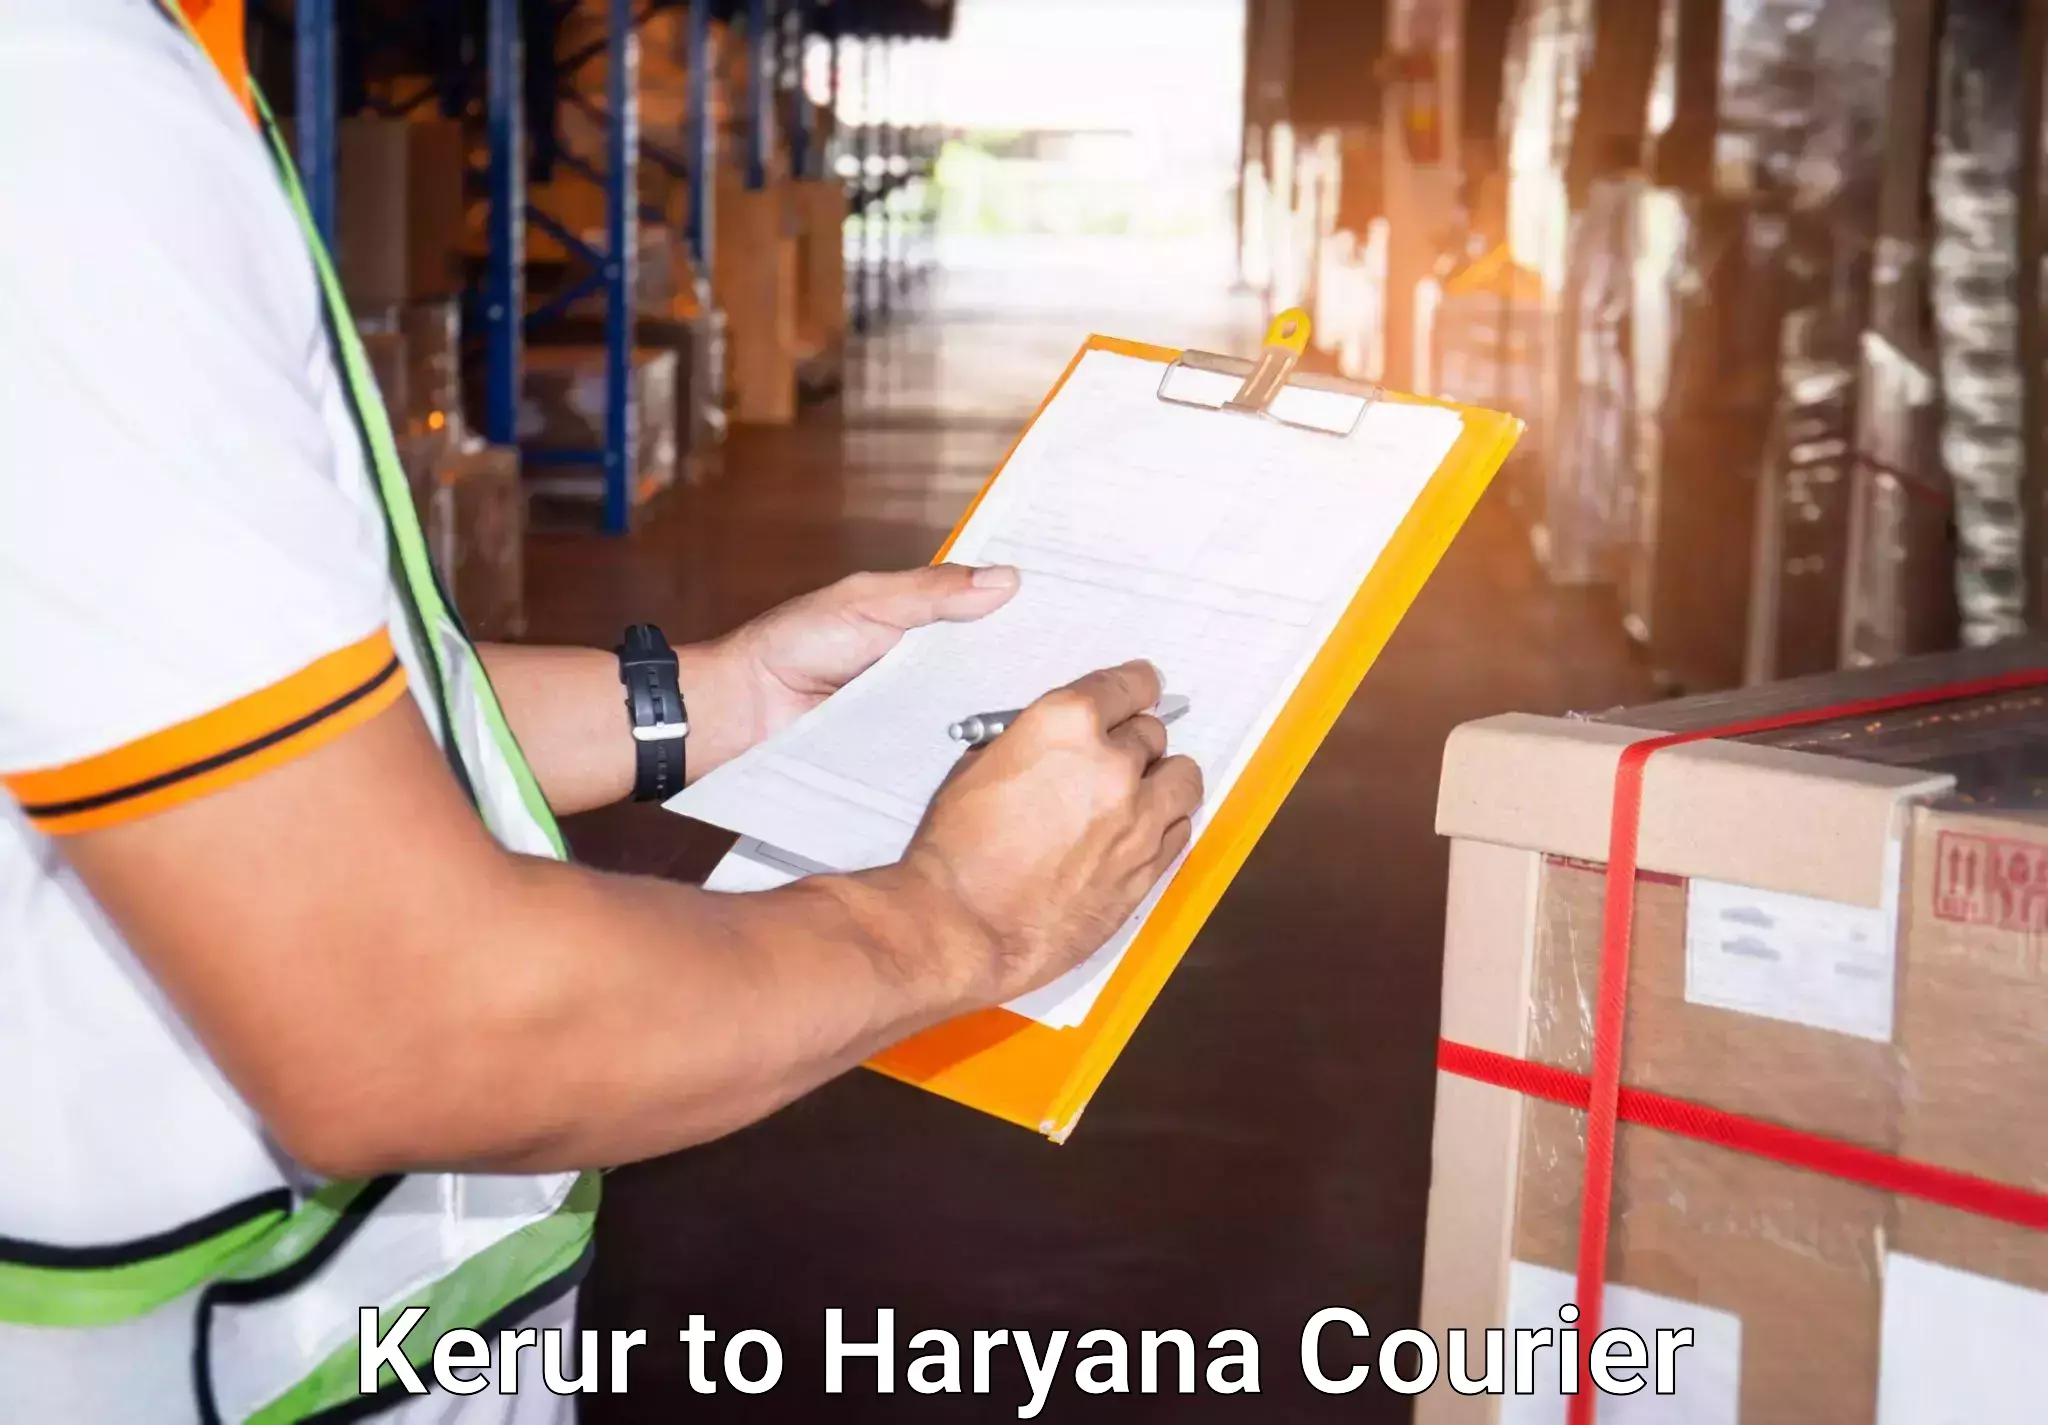 Hassle-free luggage shipping Kerur to Gurgaon